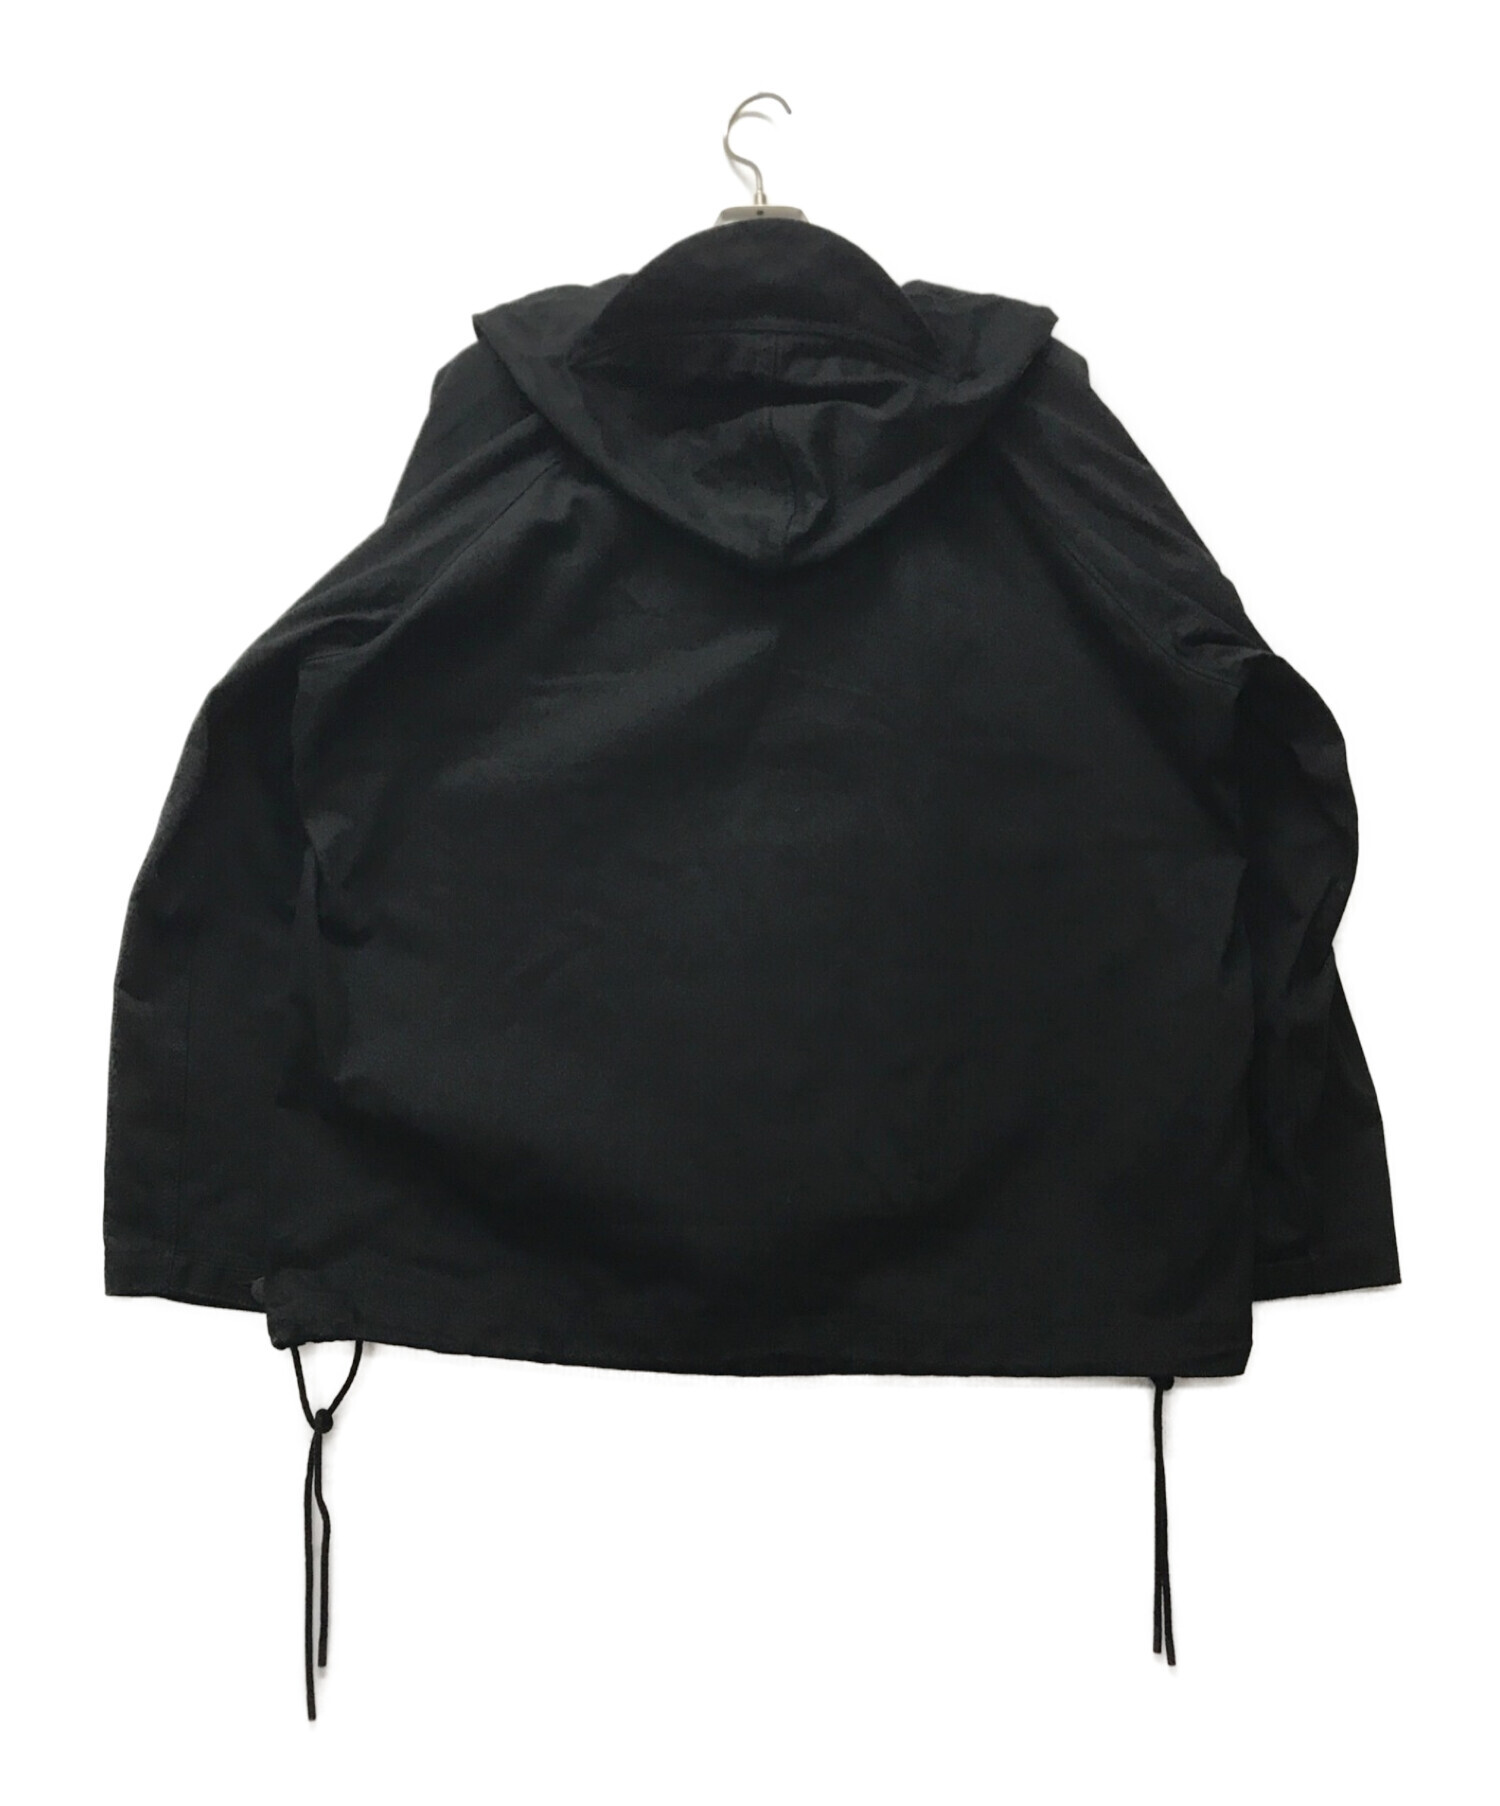 HYKE (ハイク) cotton deck parka jacket ブラック サイズ:M